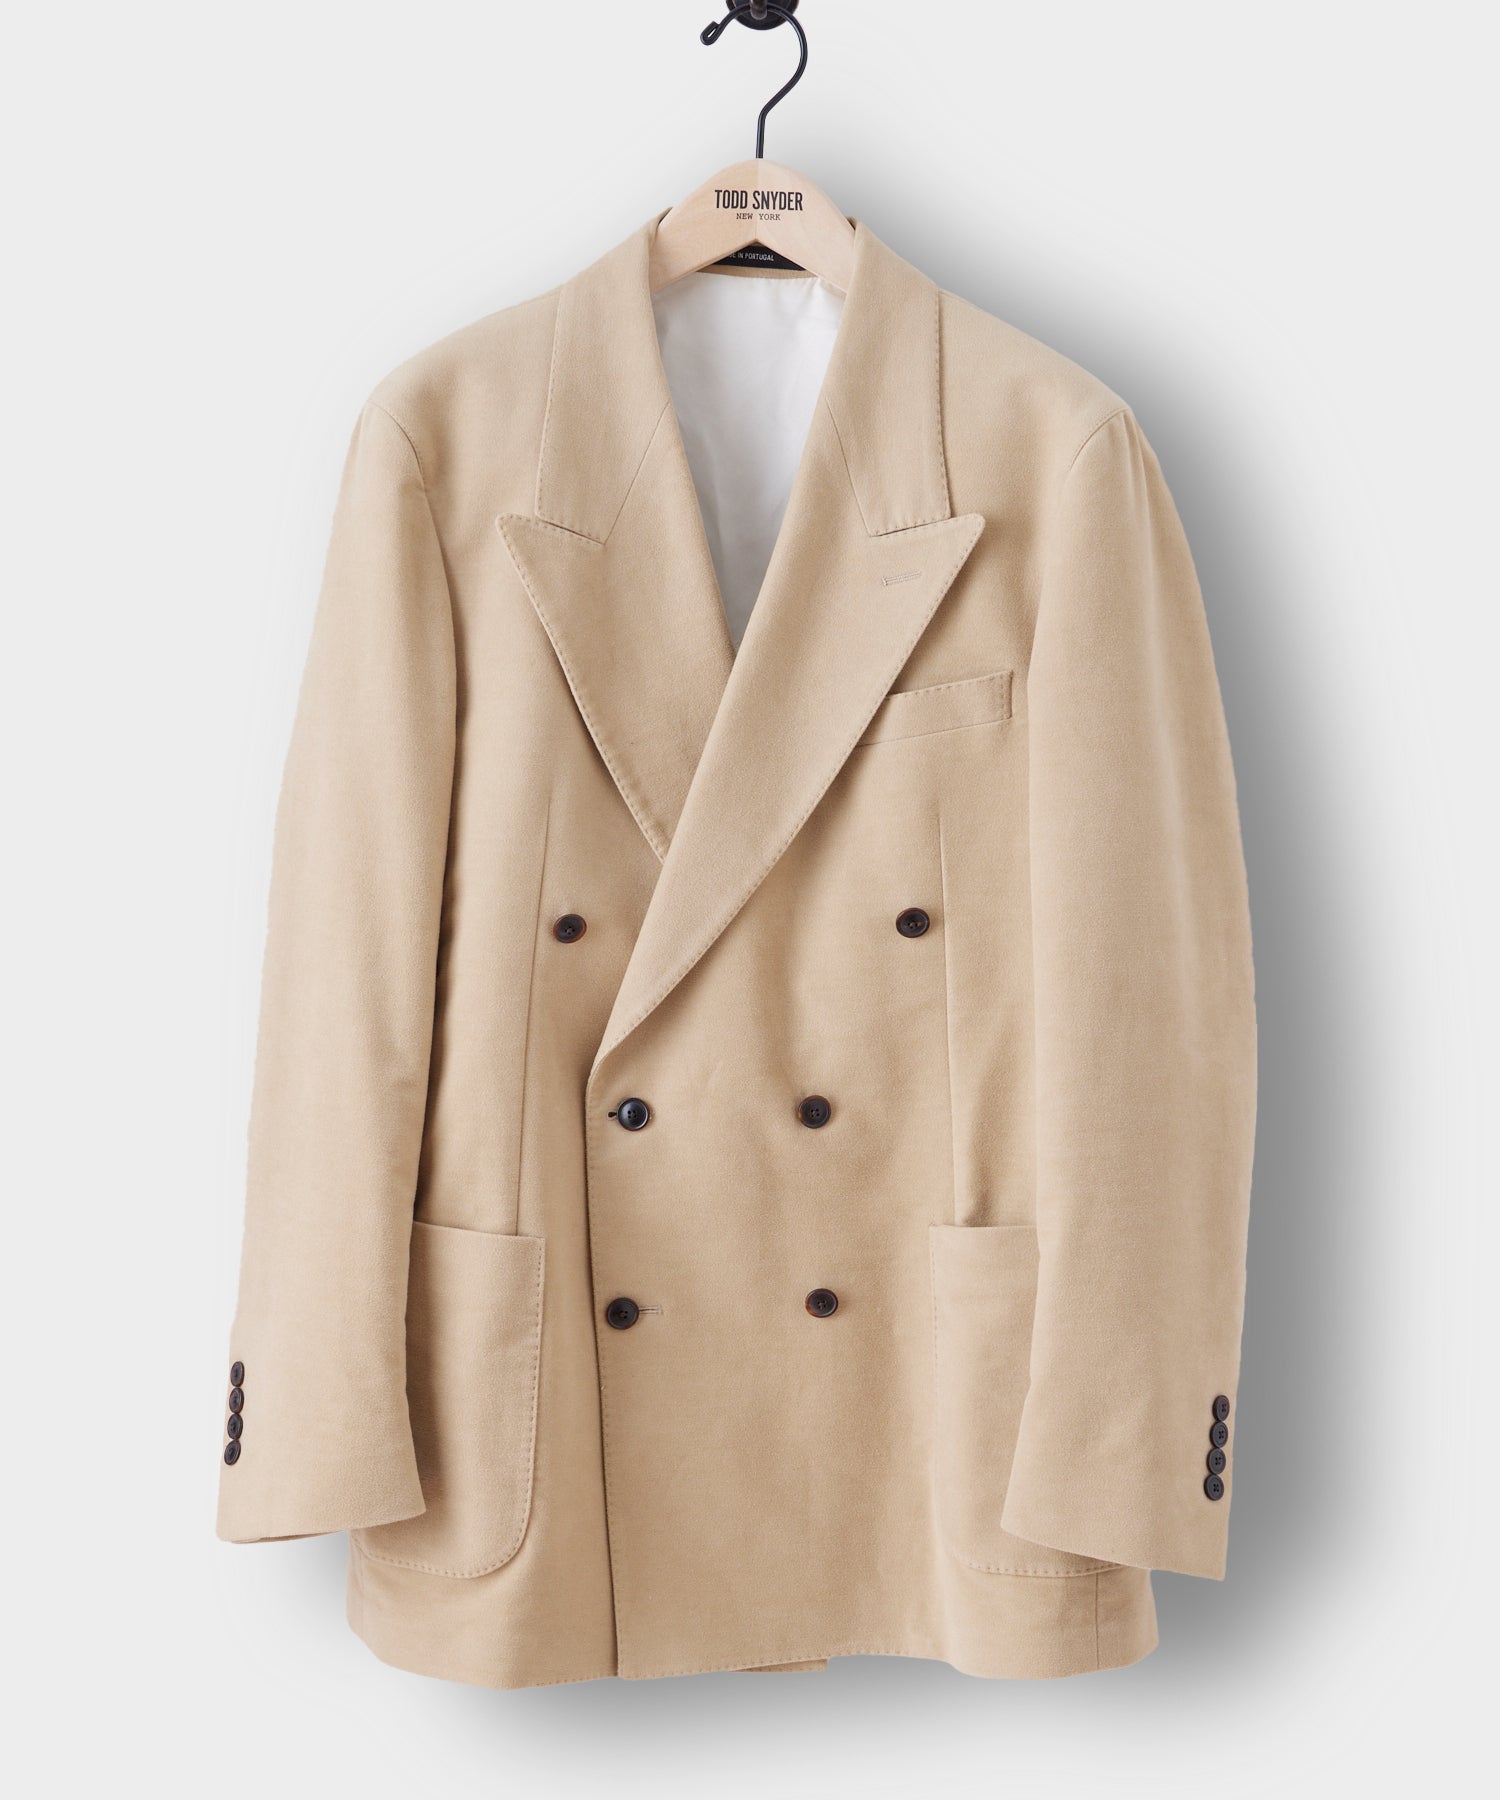 1930s Style Men’s Suits, Sportscoats Moleskin Double-Breasted Madison Suit Jacket $698.00 AT vintagedancer.com